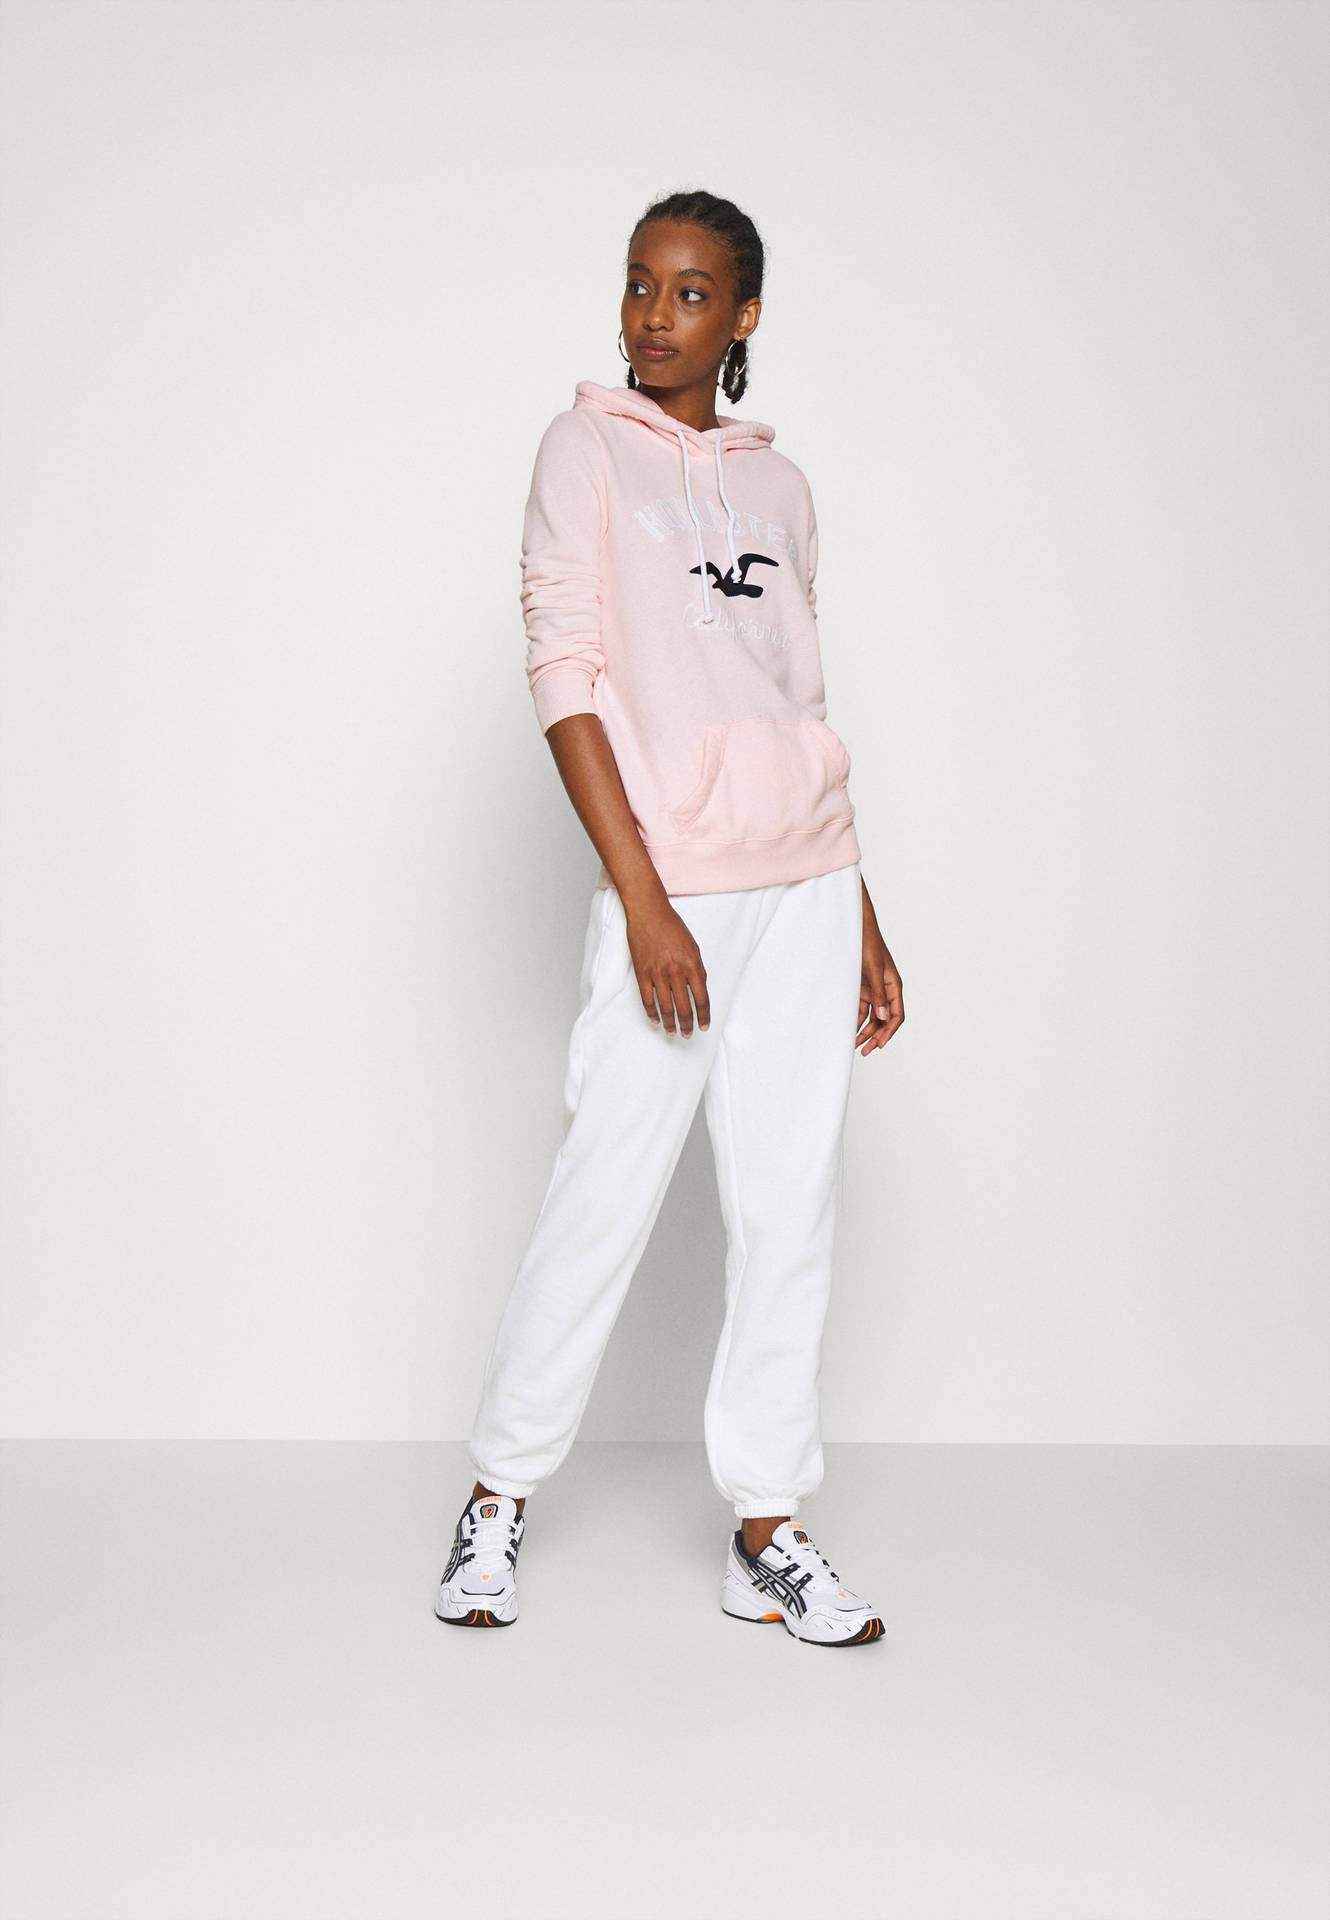 Model In Pink Hollister Jacket Wallpaper